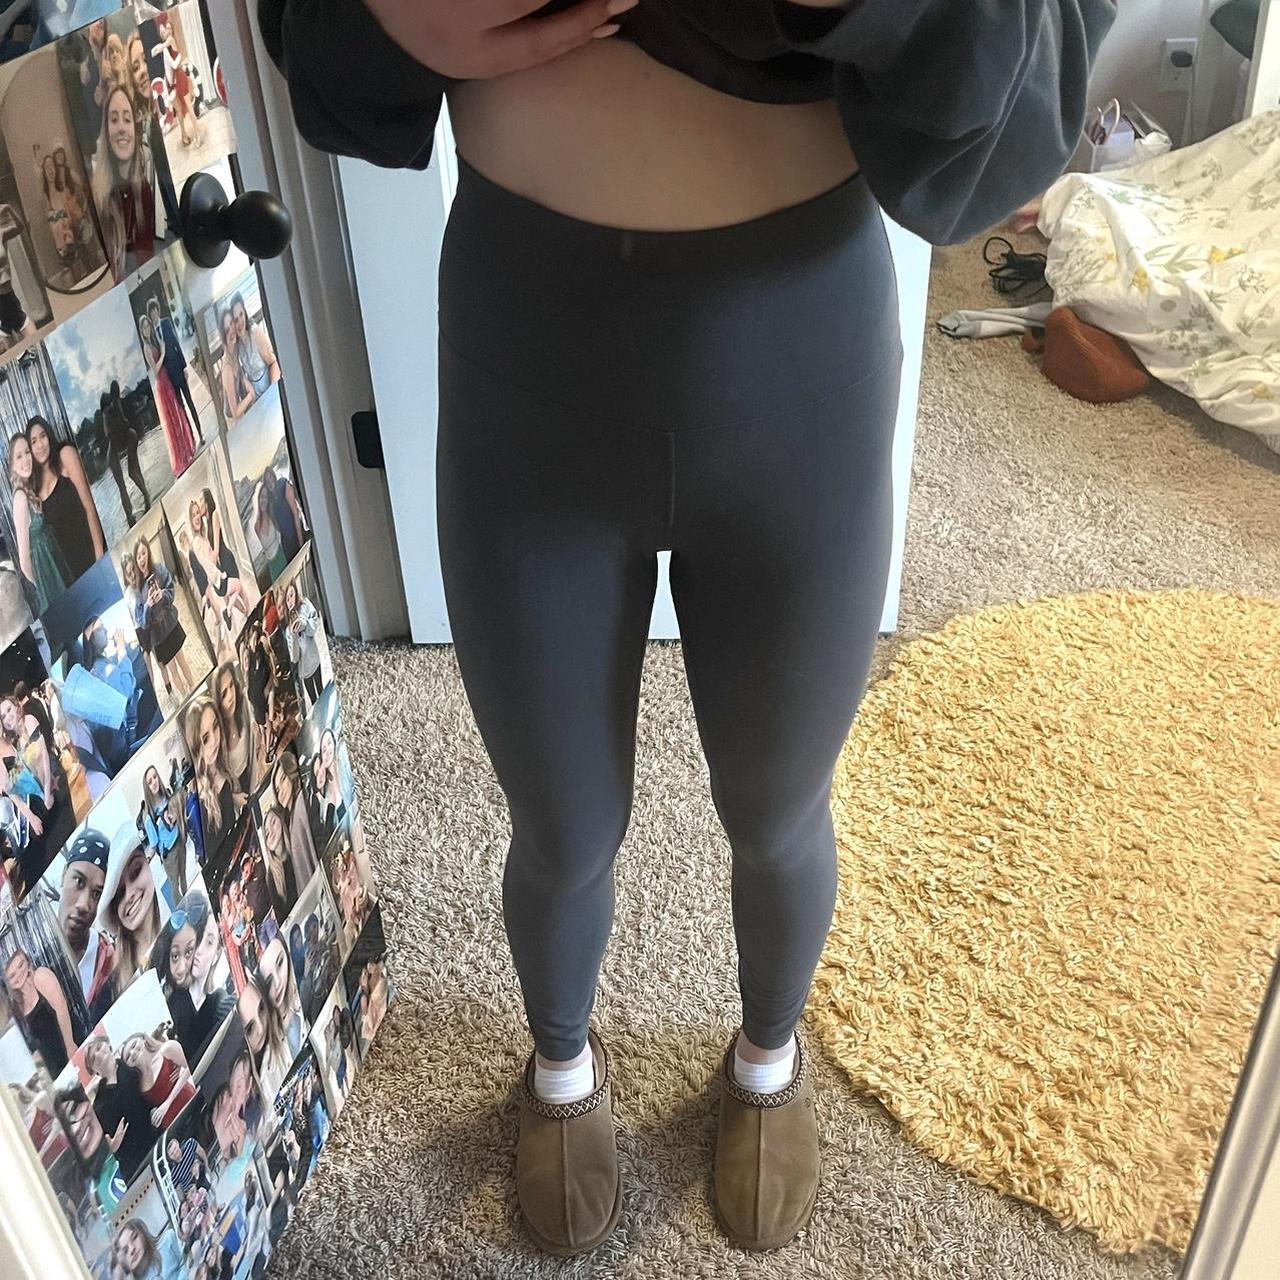 Grey Lululemon leggings, -, Small pilling, -, Size 0-2